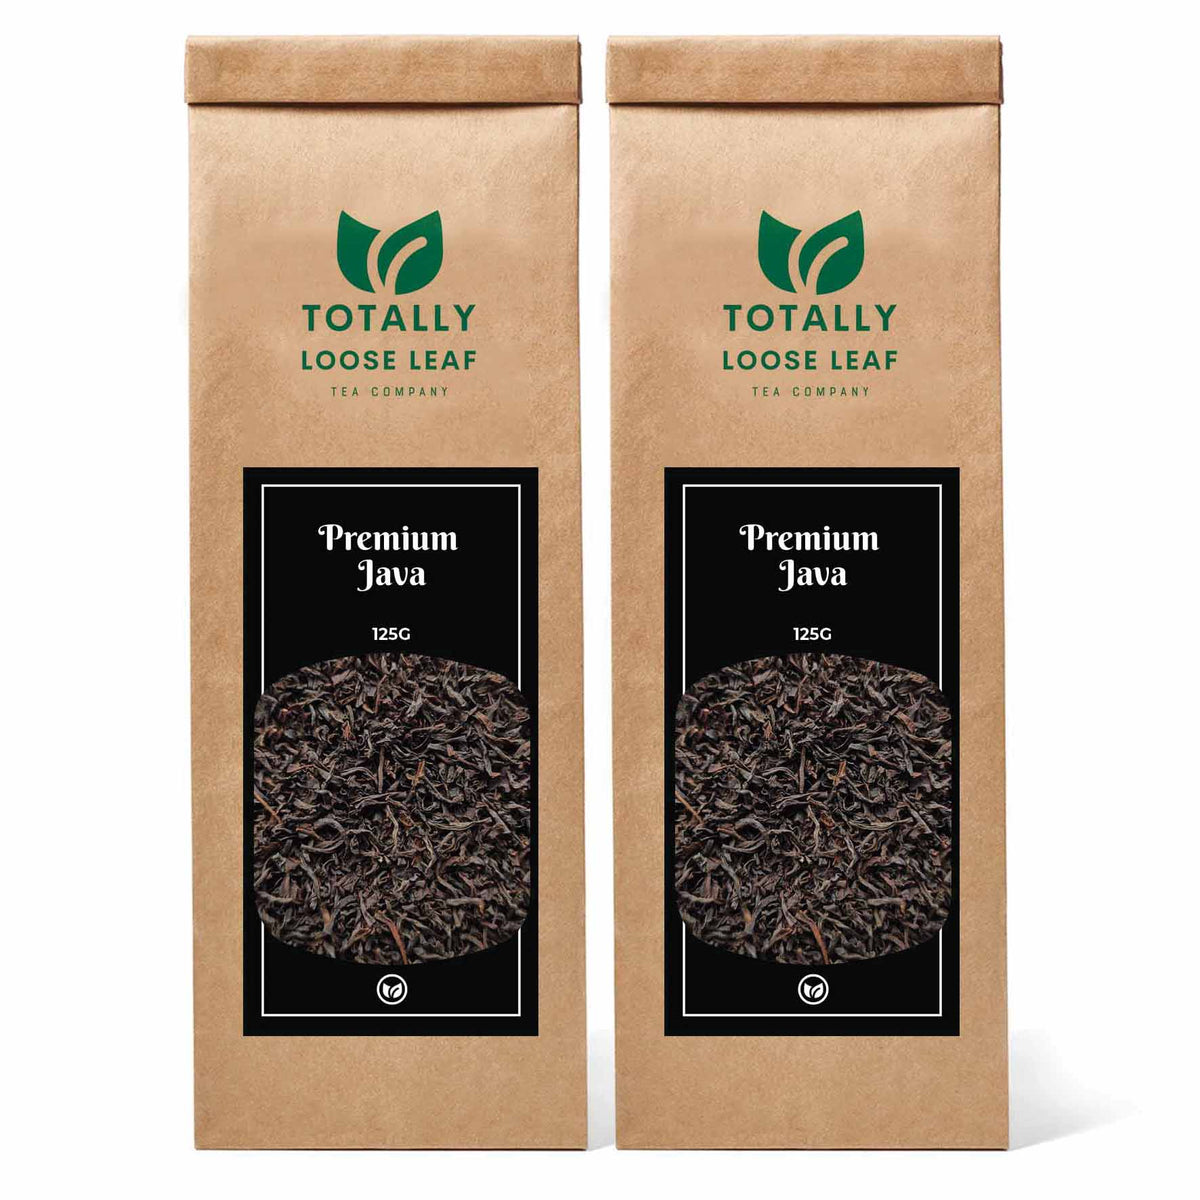 Premium Java Black Estate Loose Leaf Tea - two pouches